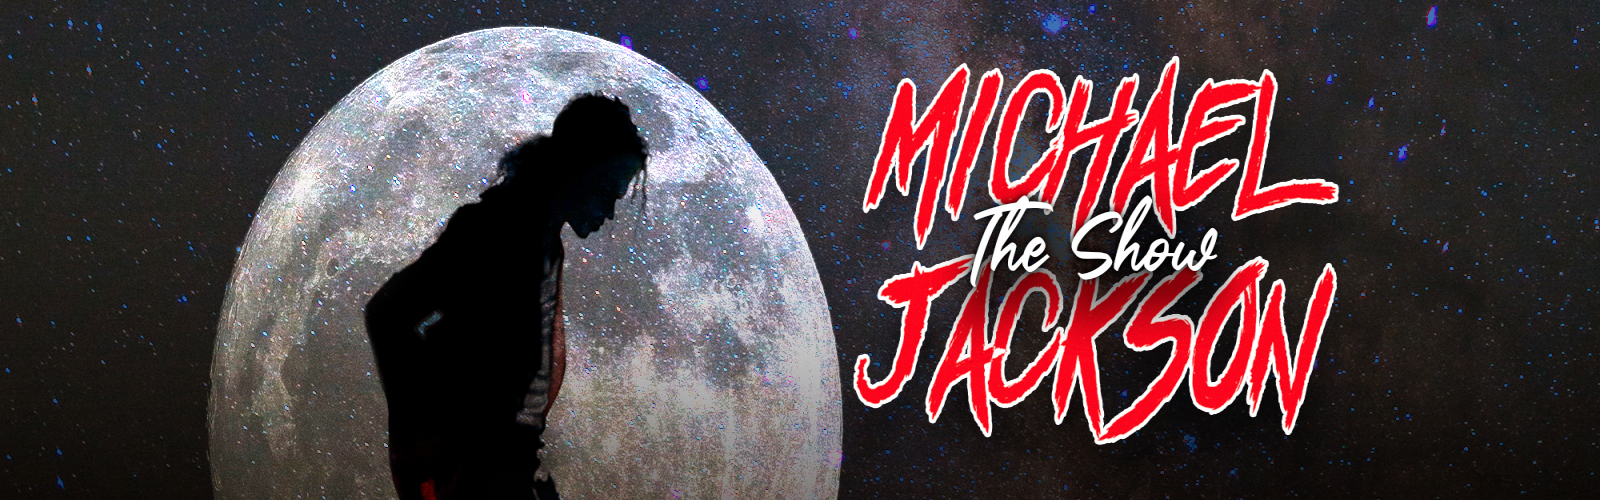 MICHAEL JACKSON - THE SHOW